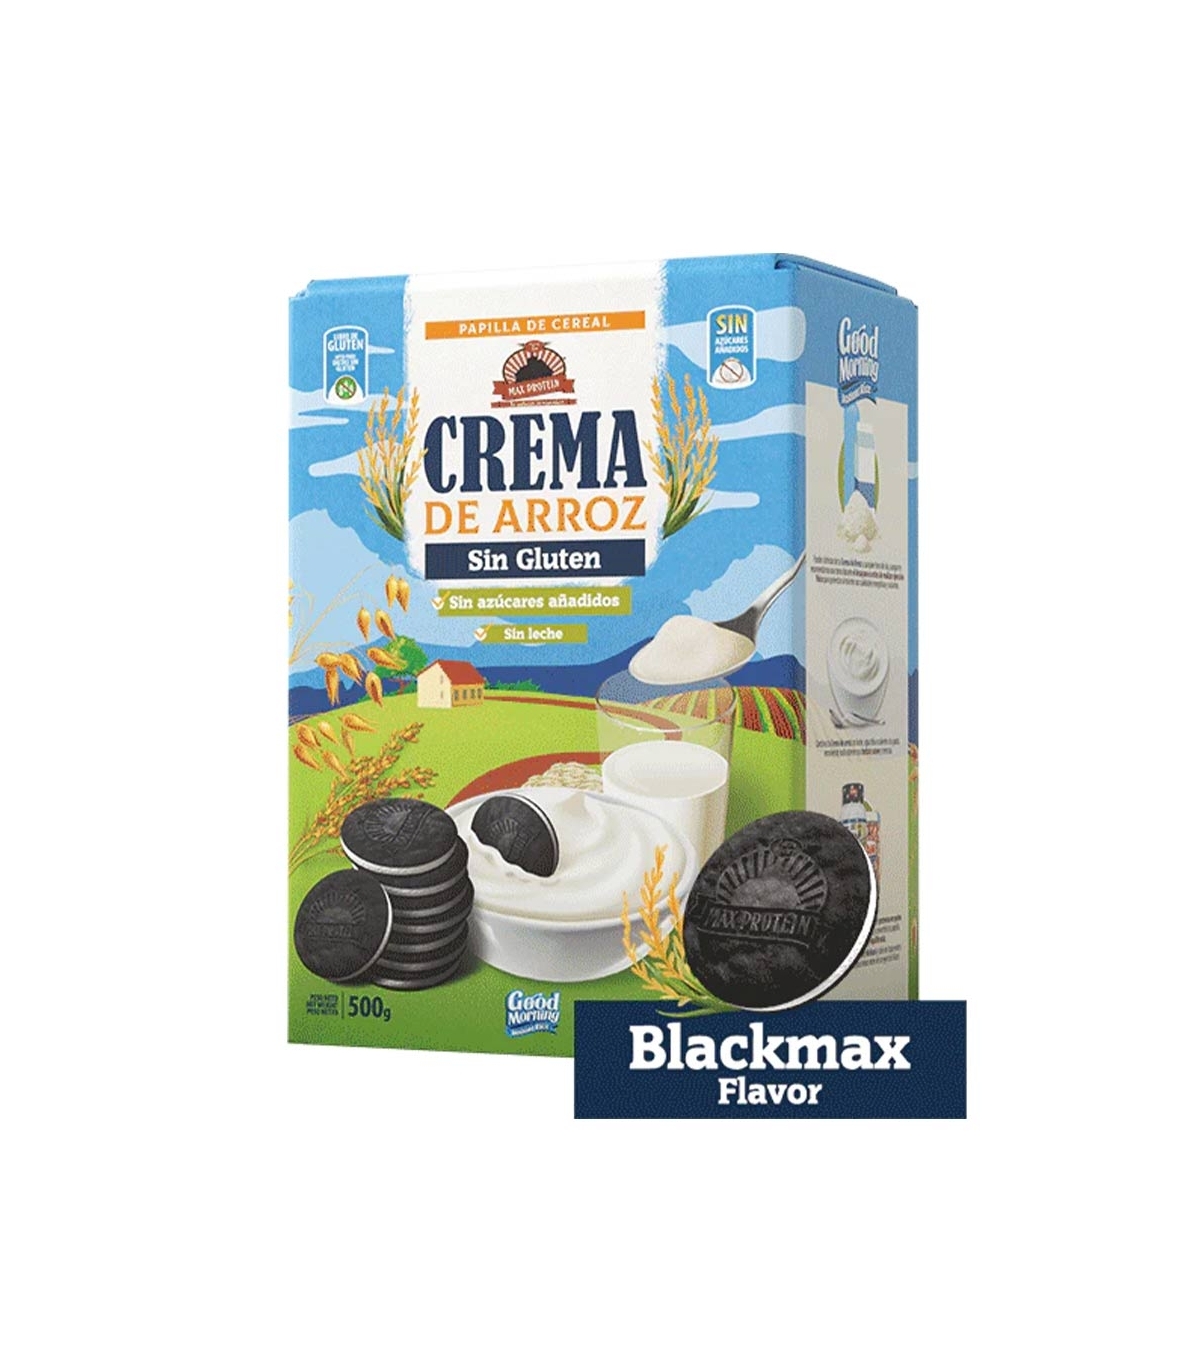 CREMA DE ARROZ Cookies and cream 1kg